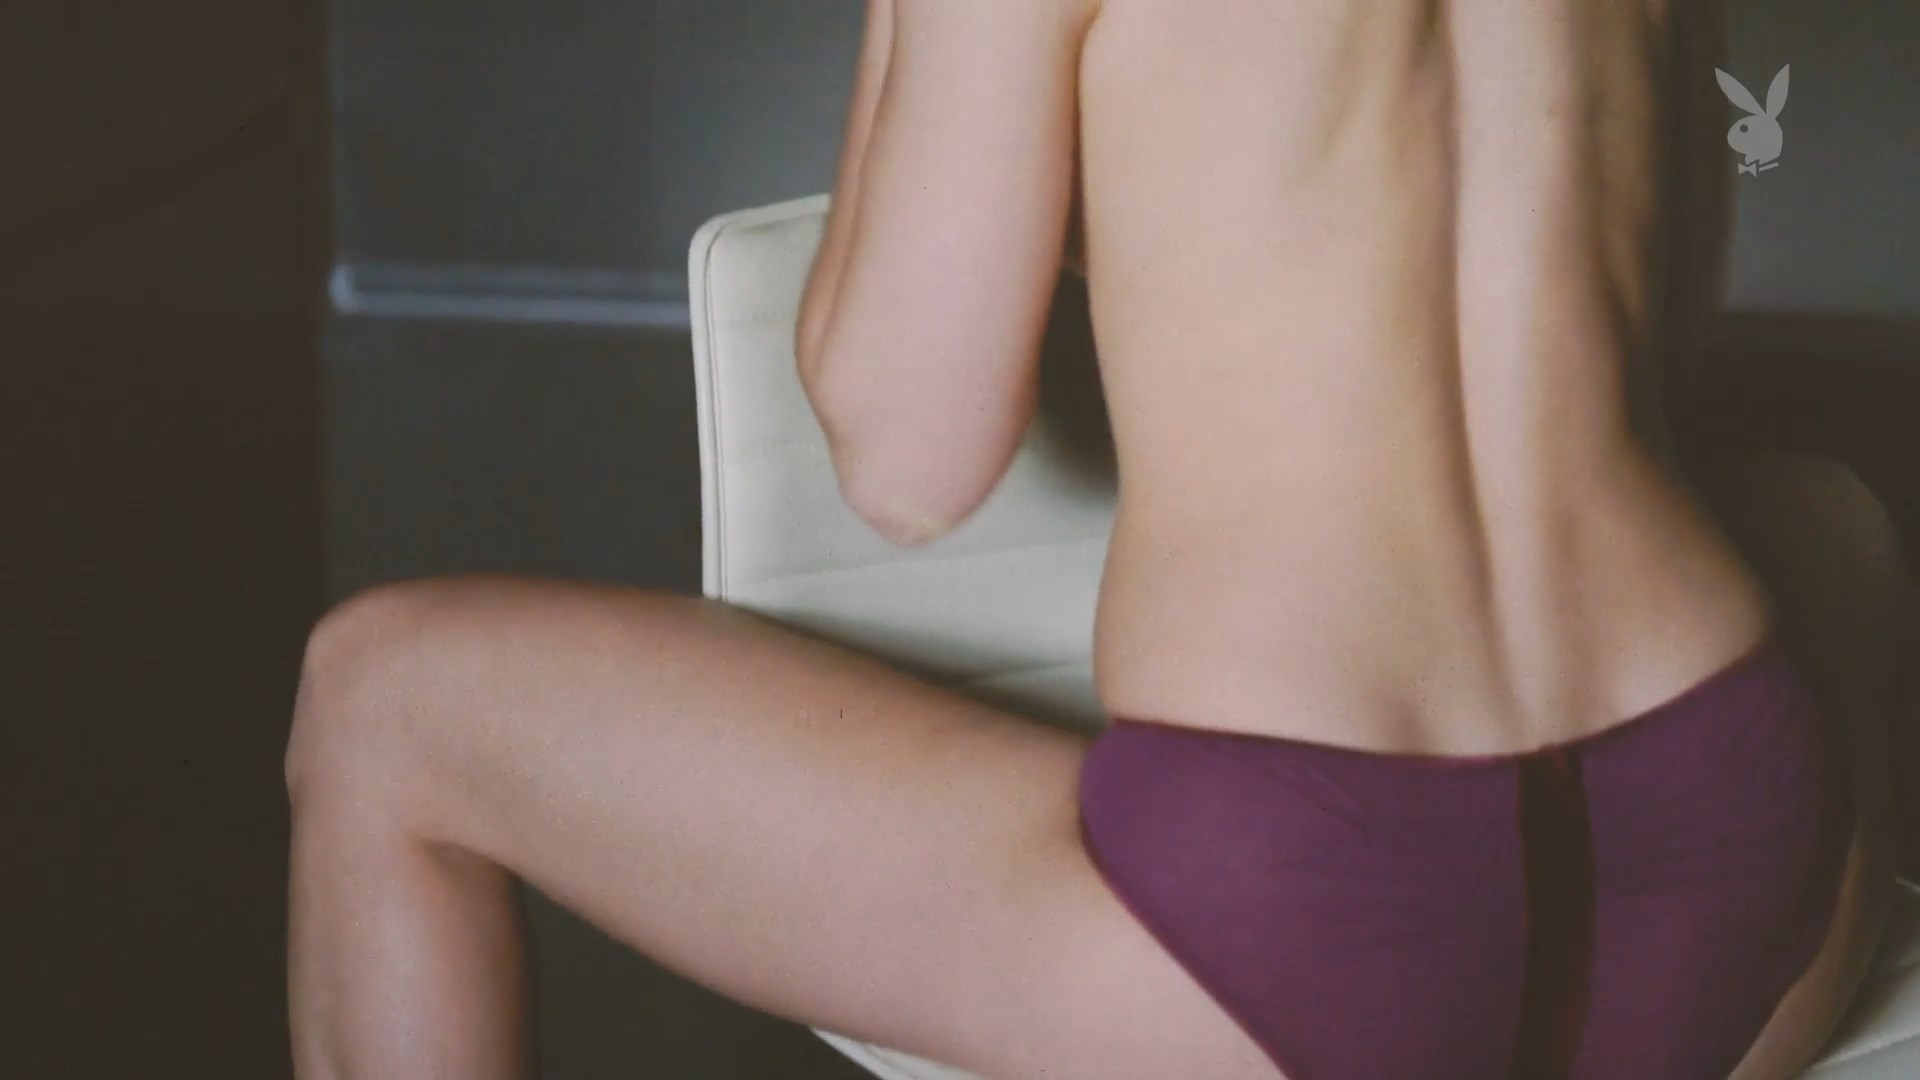 Eniko Mihalik leaked naked pics